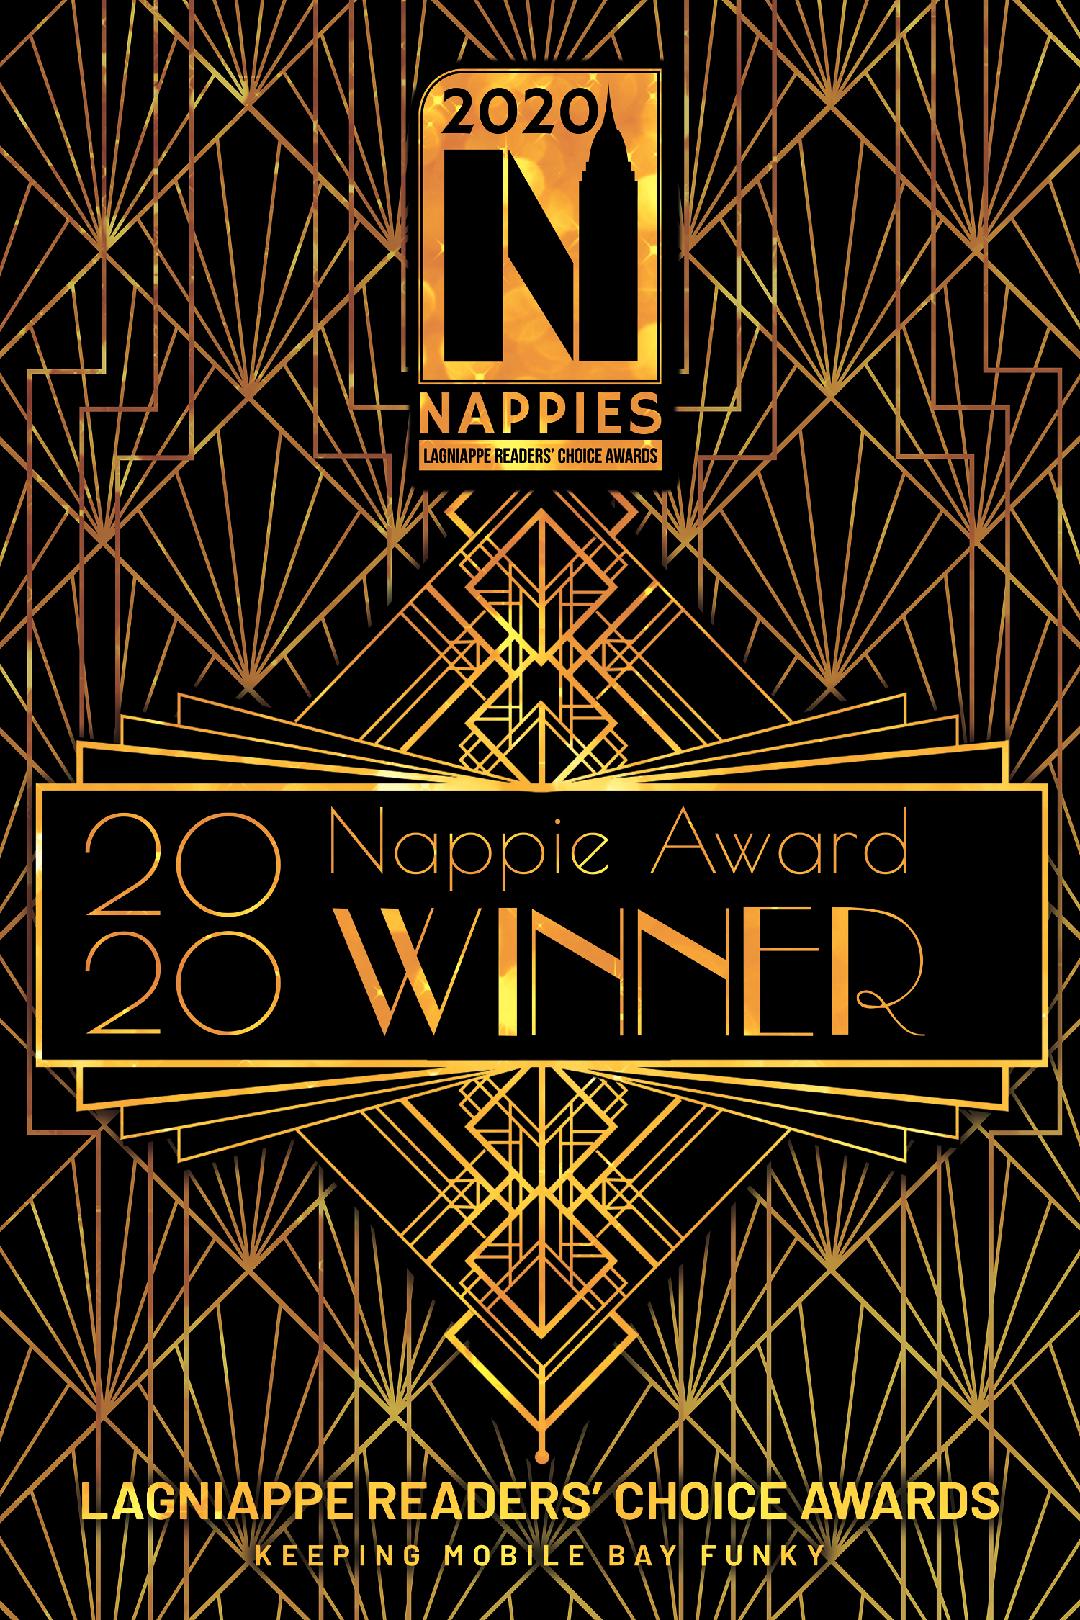 Nappie Award 2020